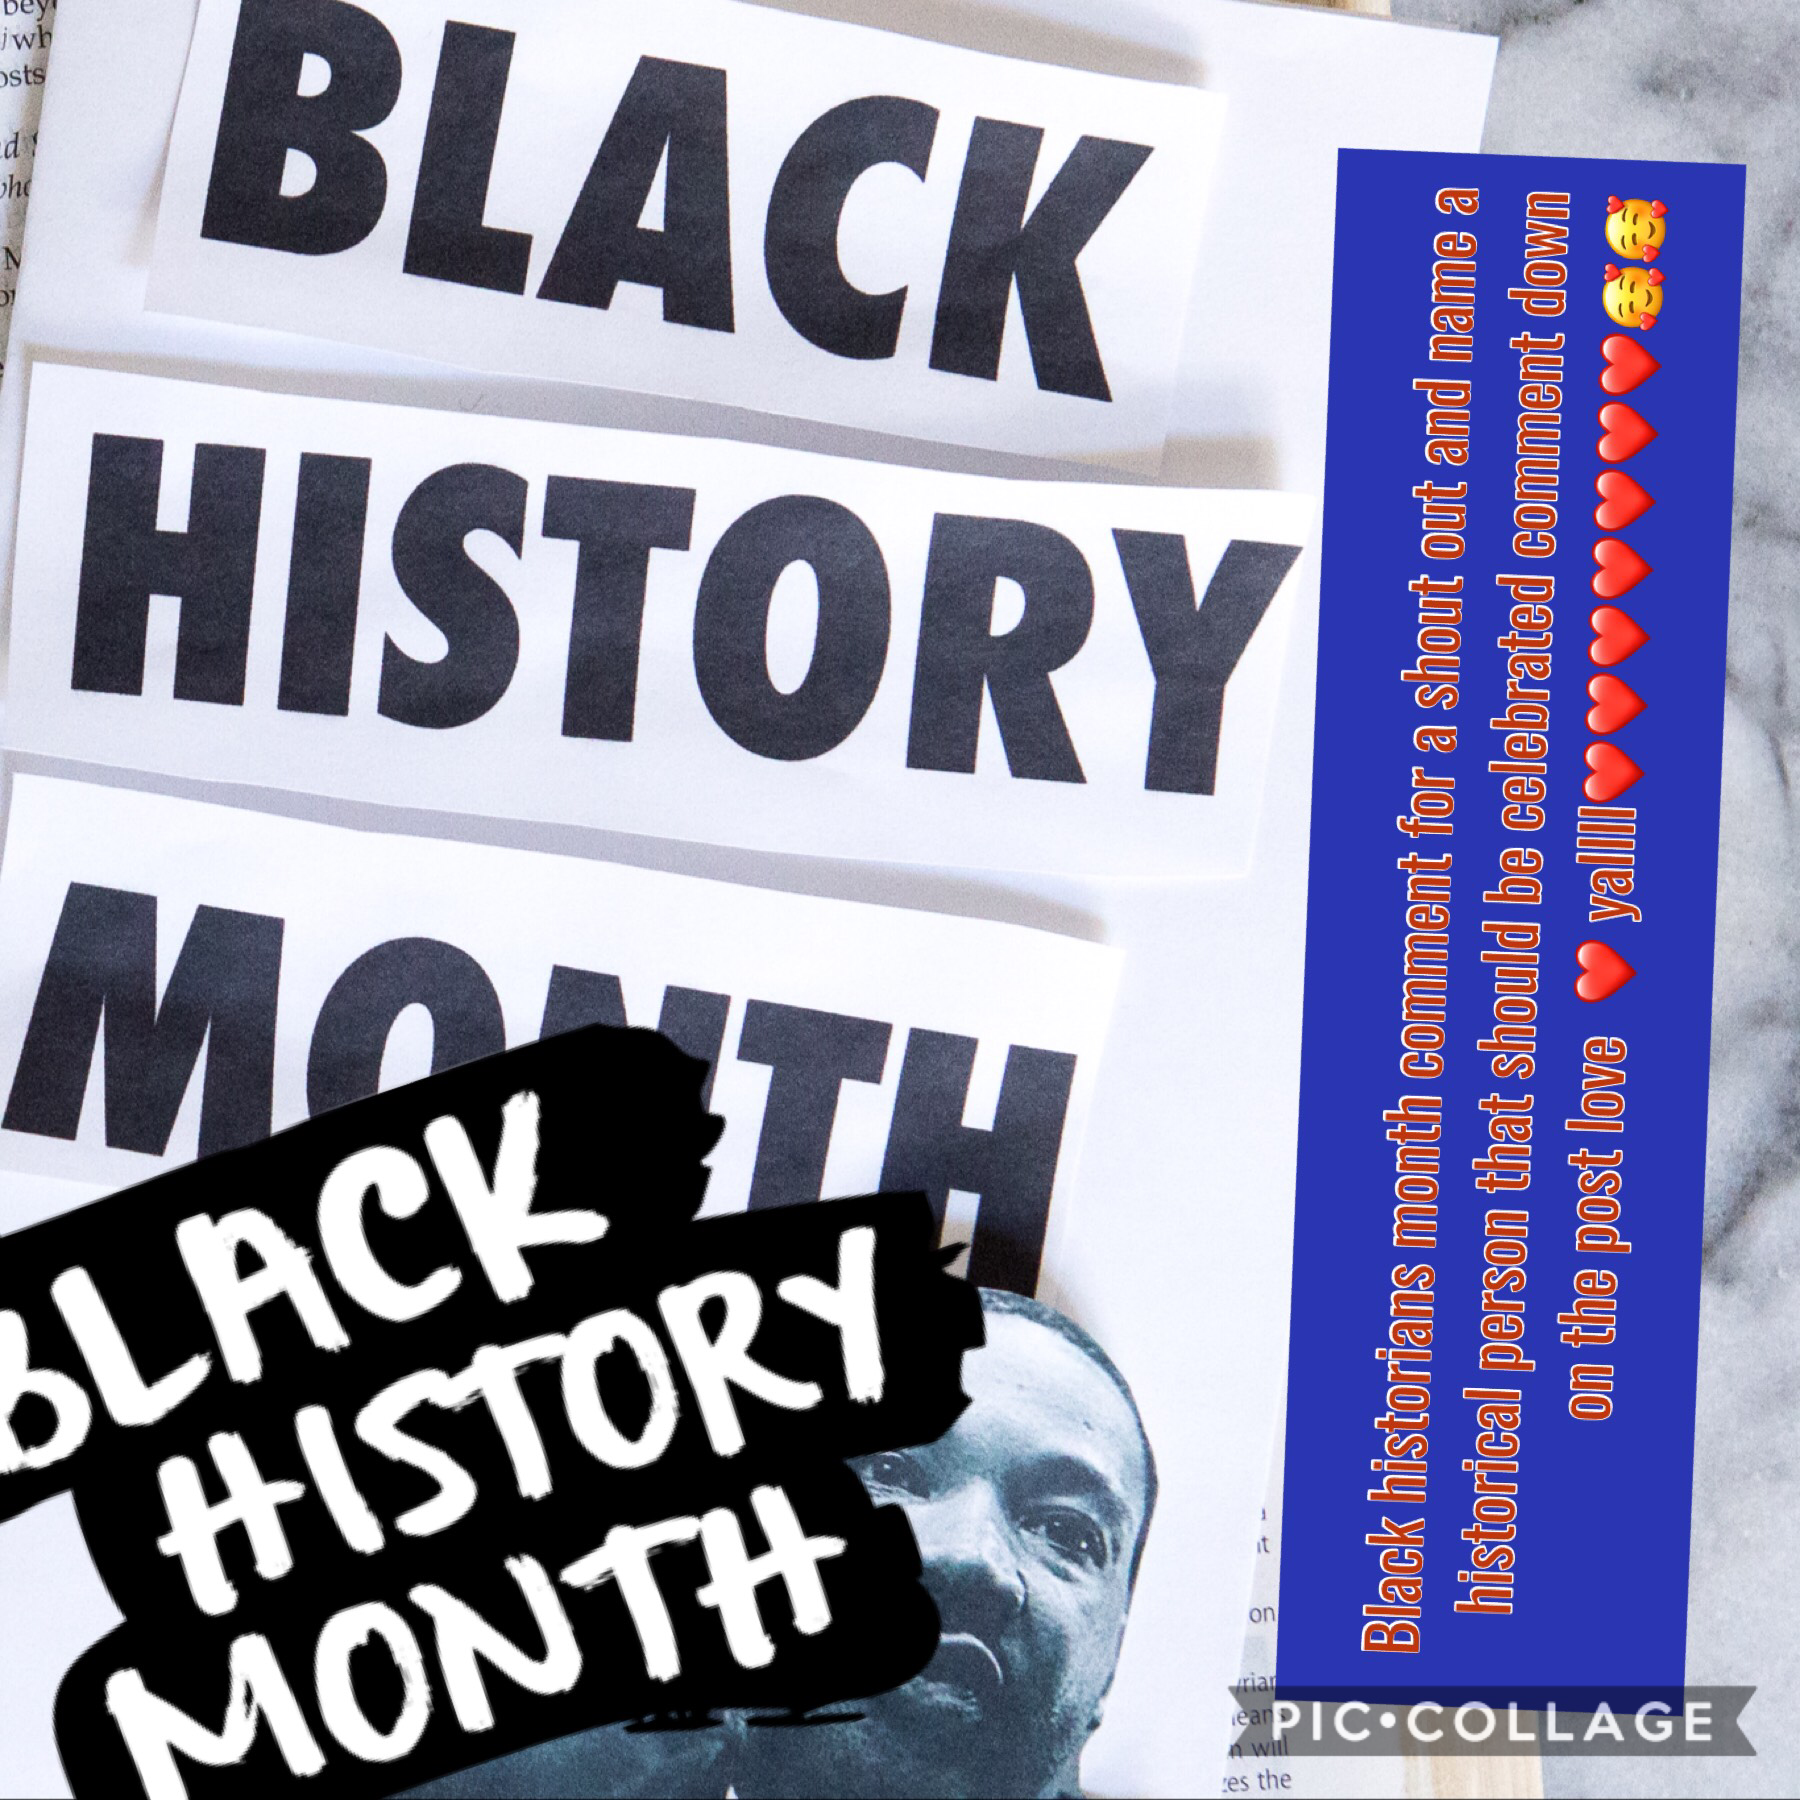 Black history 